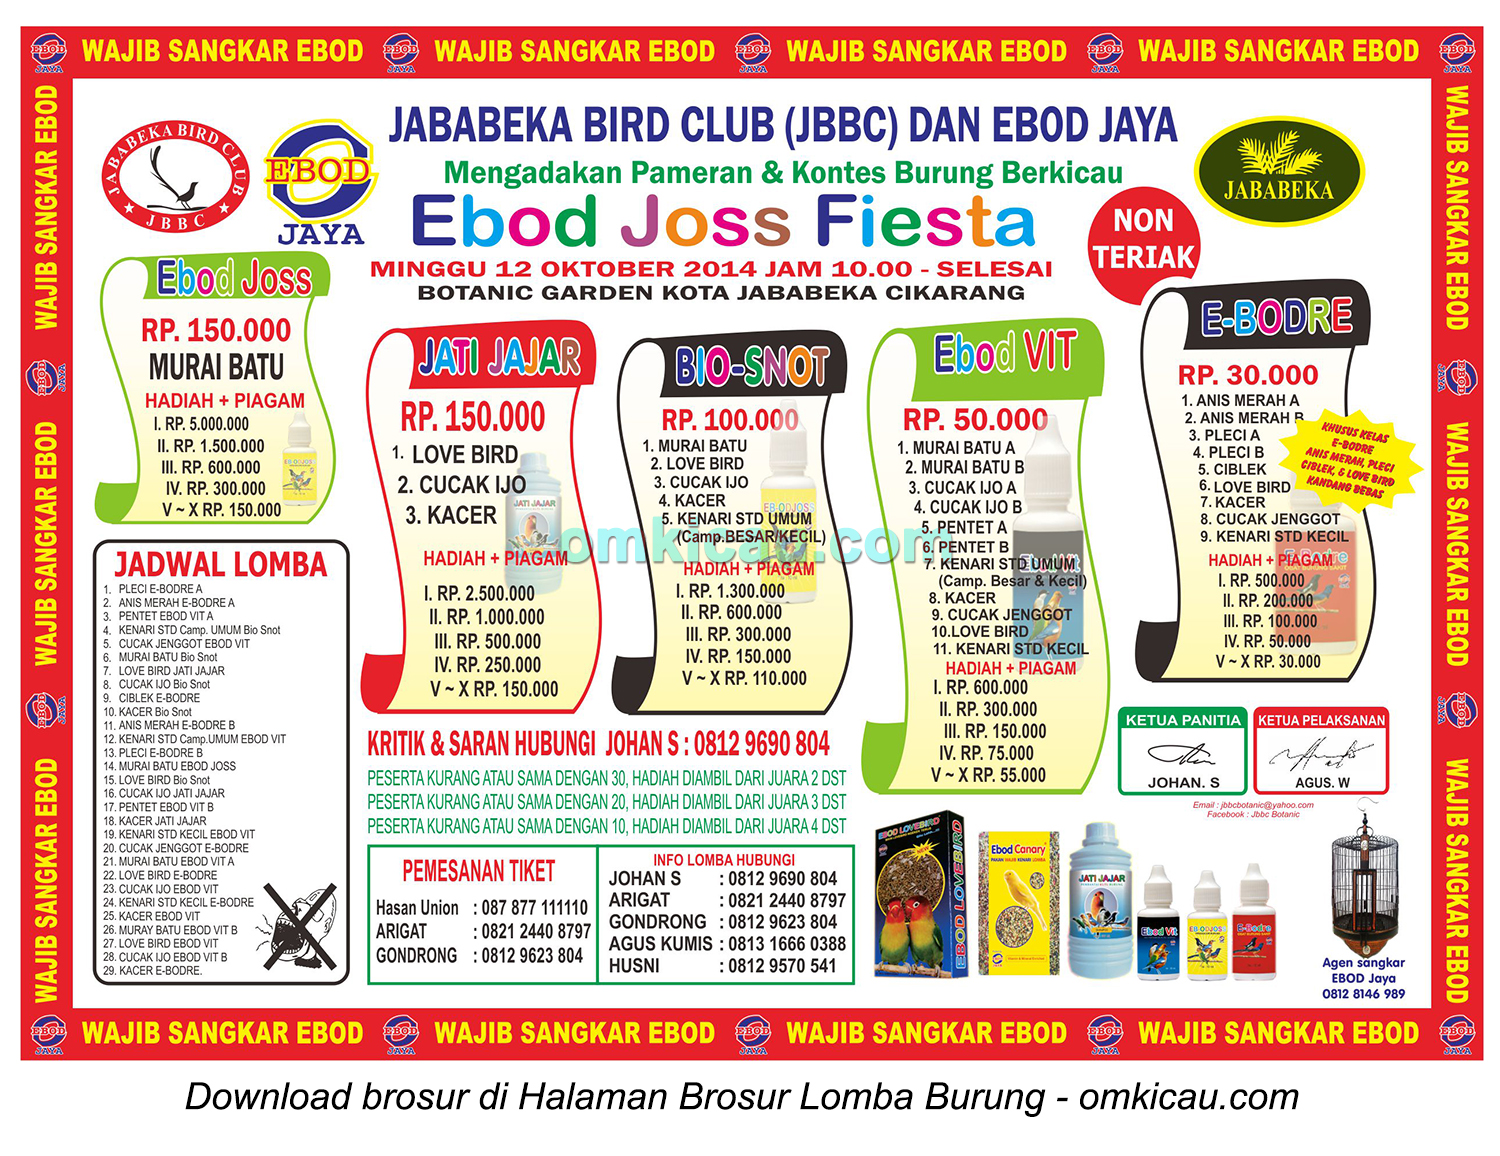 Brosur Lomba Burung Berkicau Ebod Joss Fiesta - JBBC, Bekasi, 12 Oktober 2014